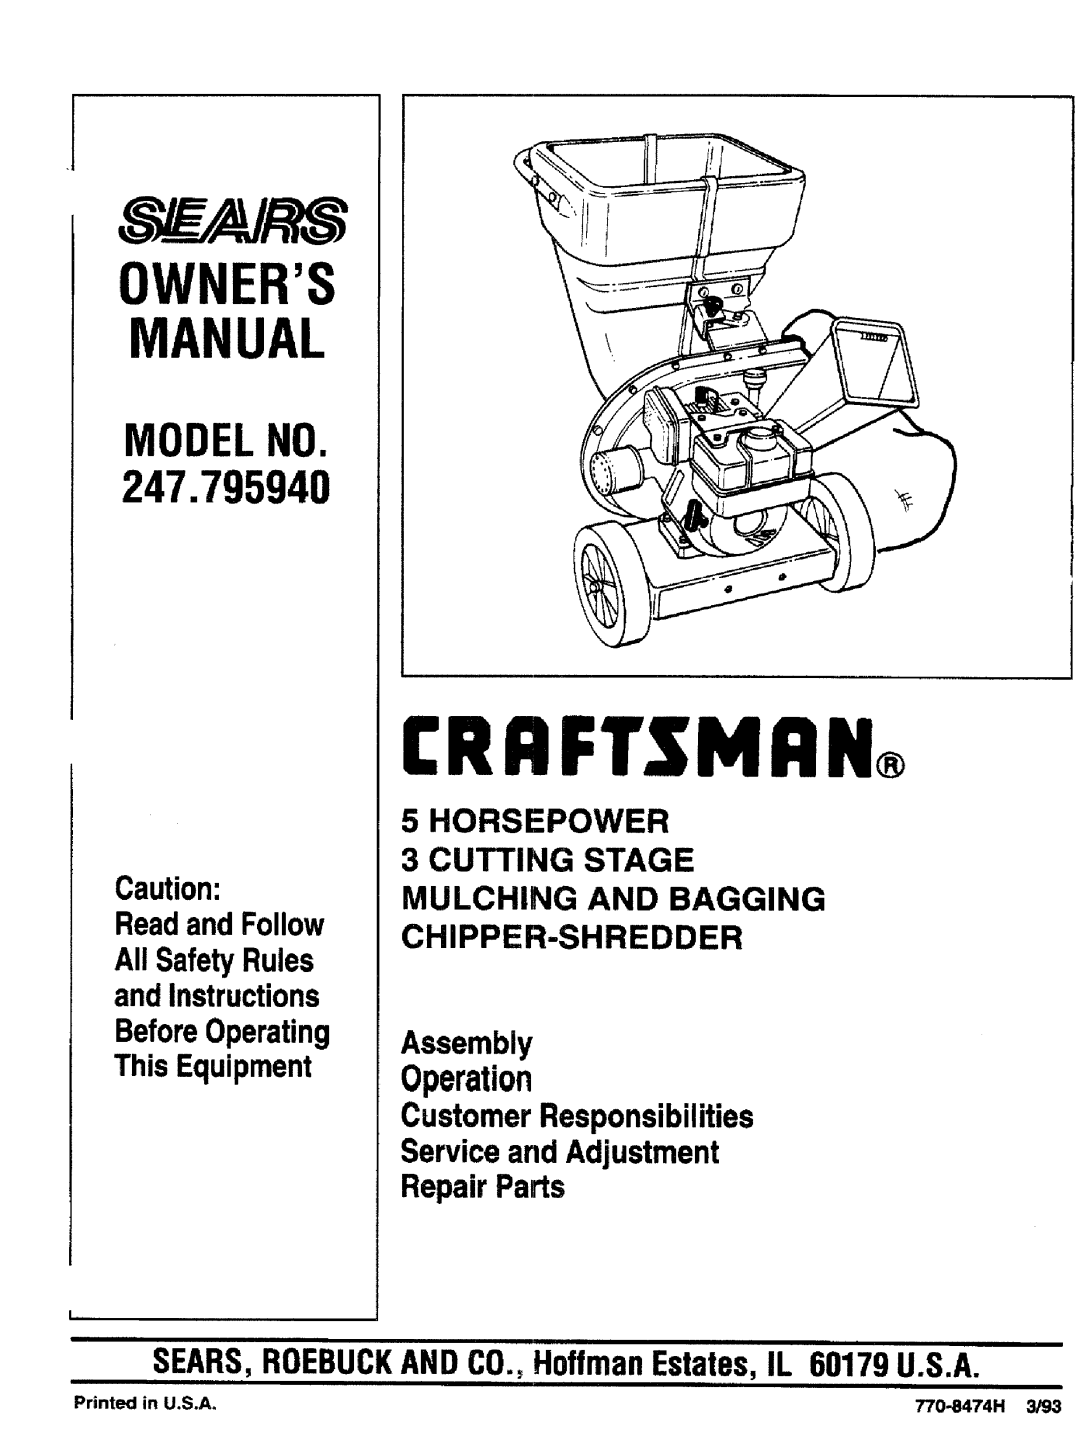 Craftsman manual I:Rrftsmrn, Owners Manual, MODELNO 247.795940 